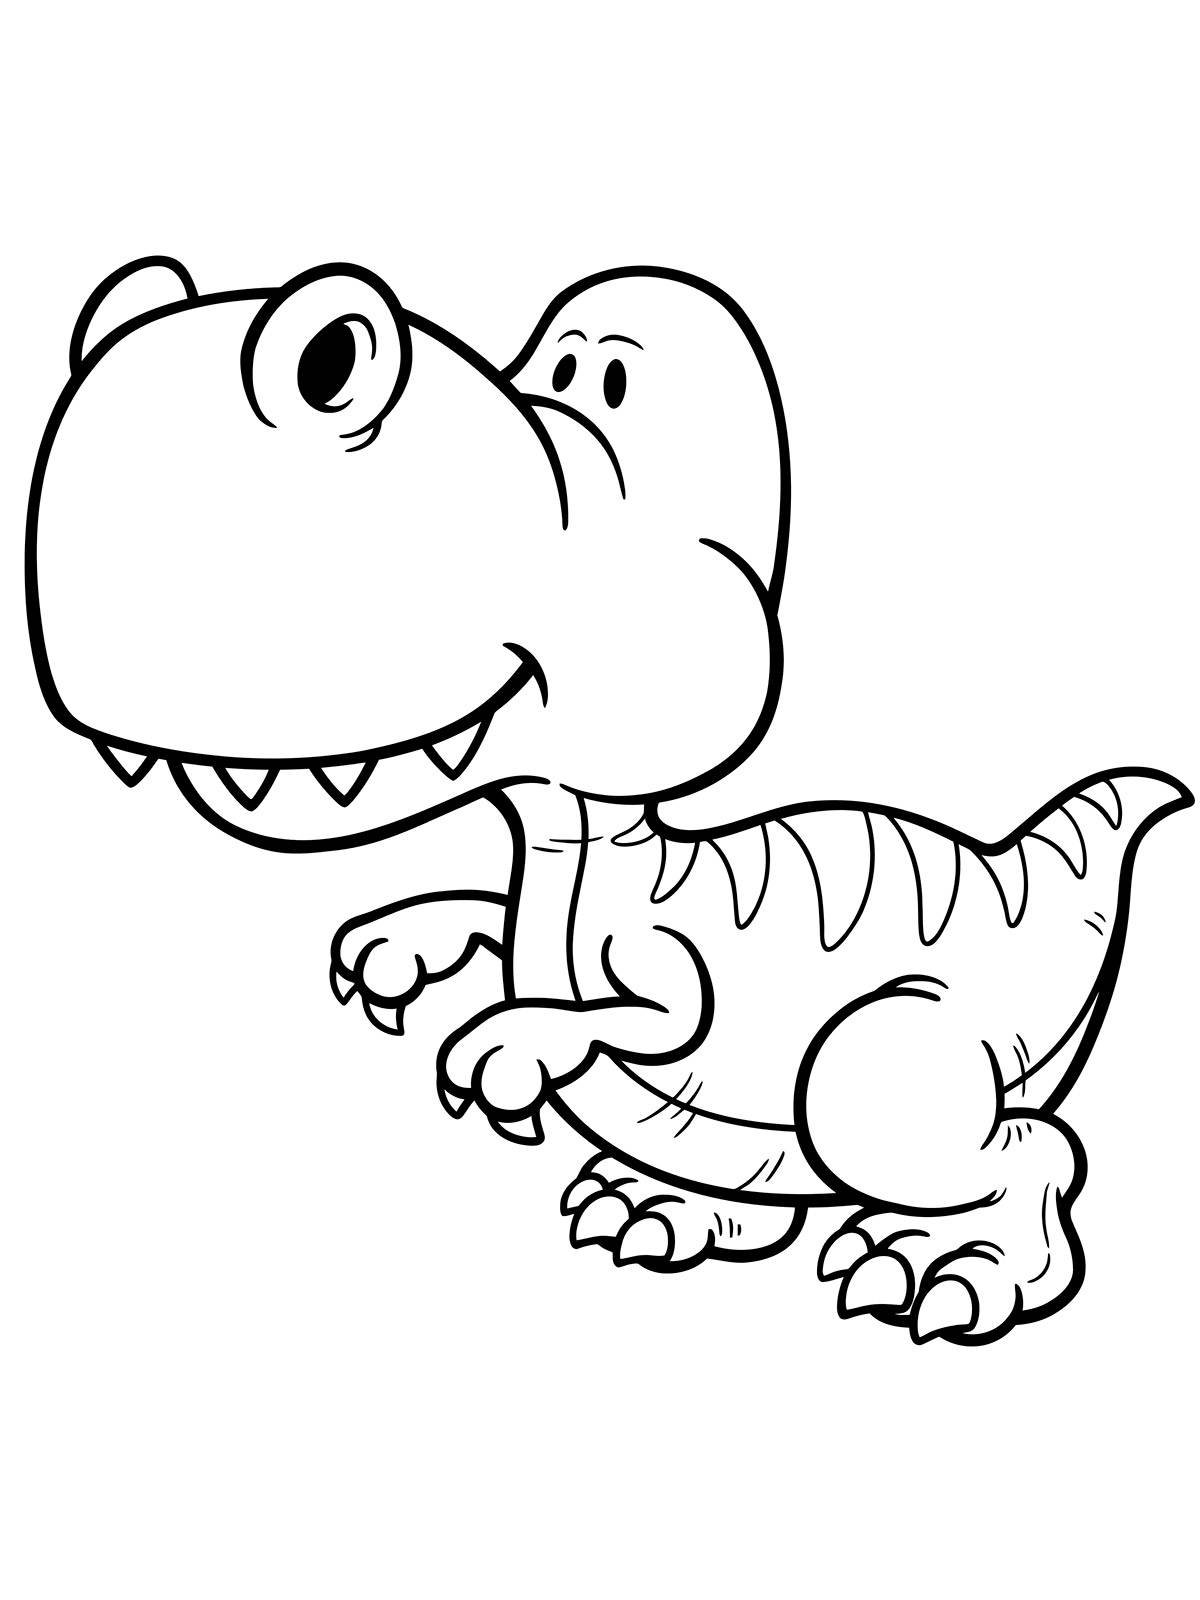 Рисунок динозаврика